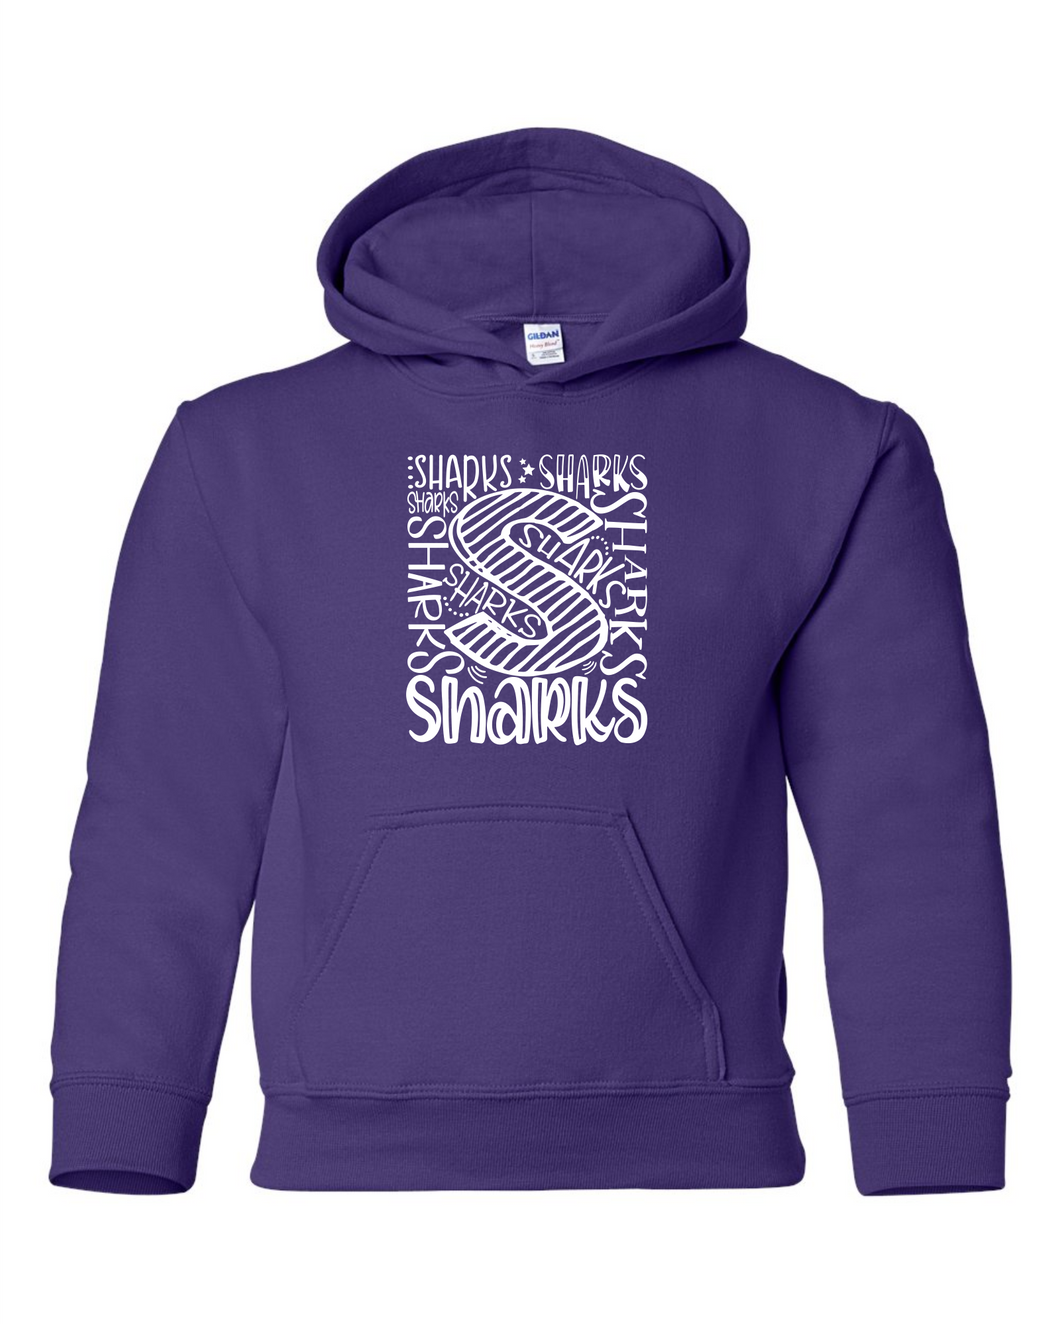 Sharks - Shark Spirit -  Hoodie - Purple     SSP